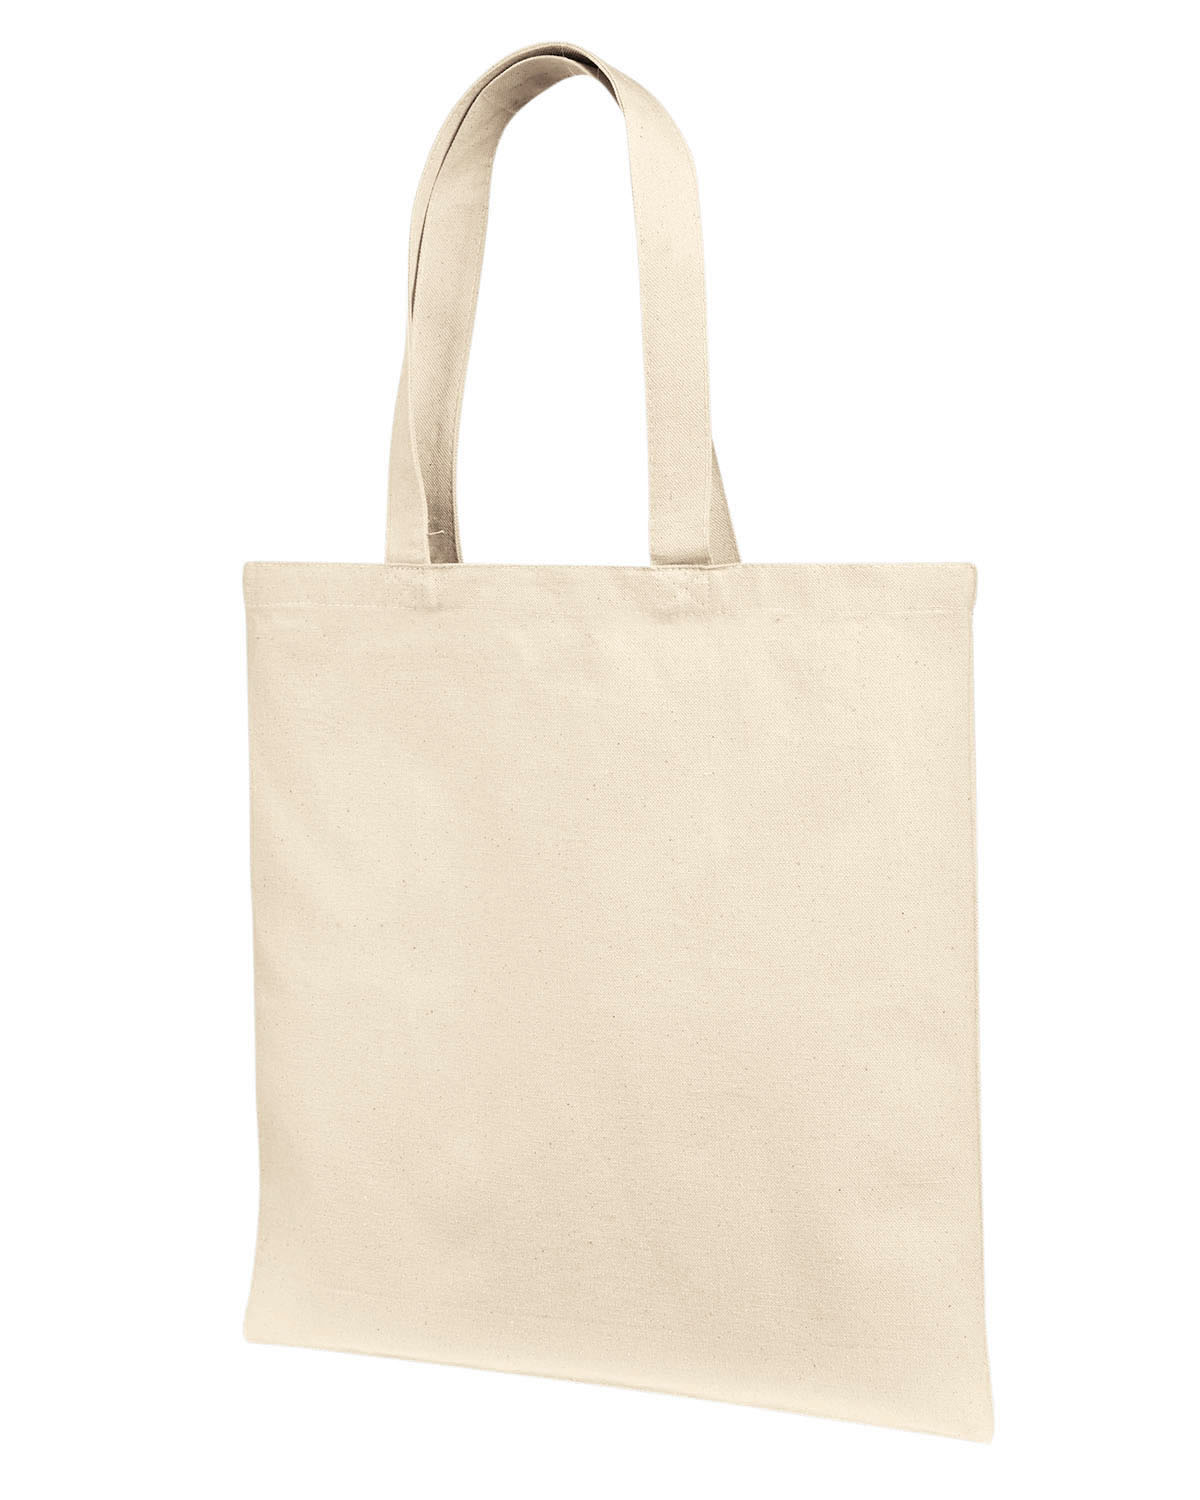 'Liberty Bags LB85113 12 Oz., Cotton Canvas Tote Bag With Self Fabric Handles'